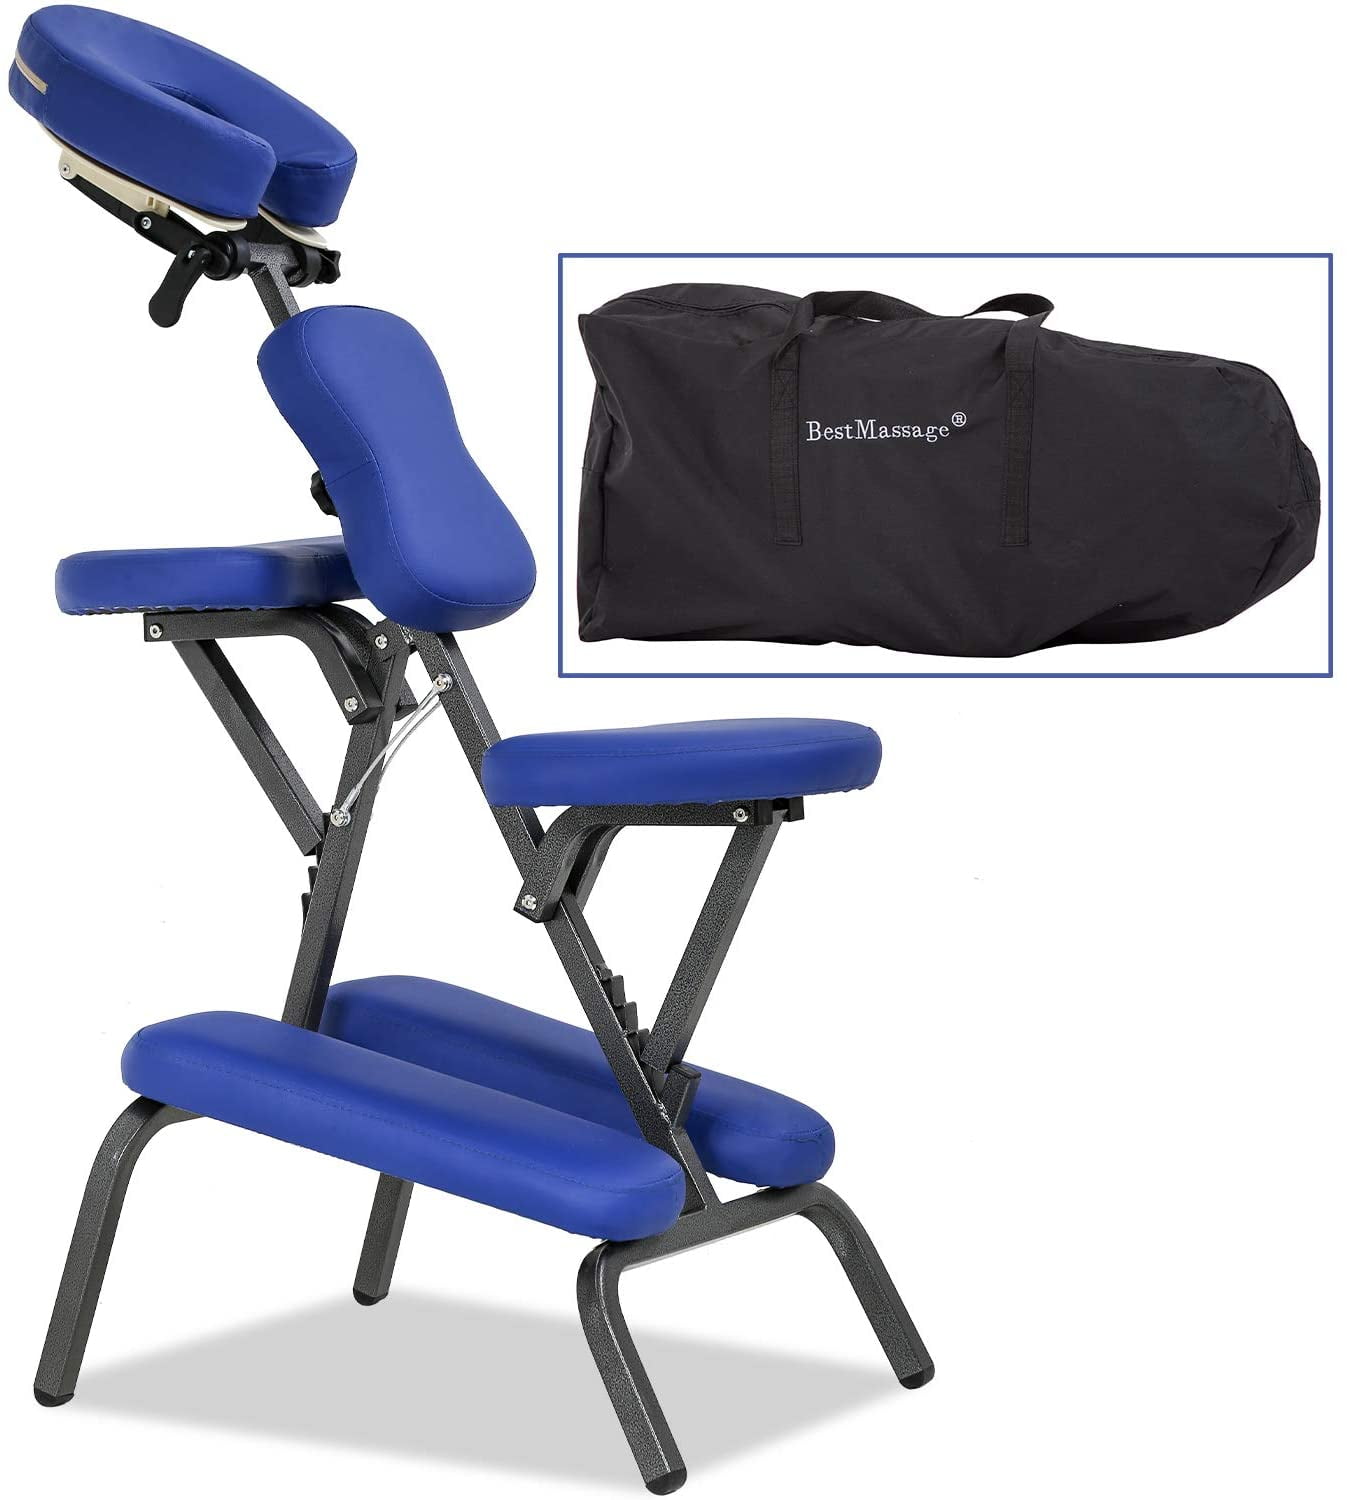 Indvending Kakadu Savvy Furinno Portable Light Weight Massage Therapy Salon Chair, Blue -  Walmart.com